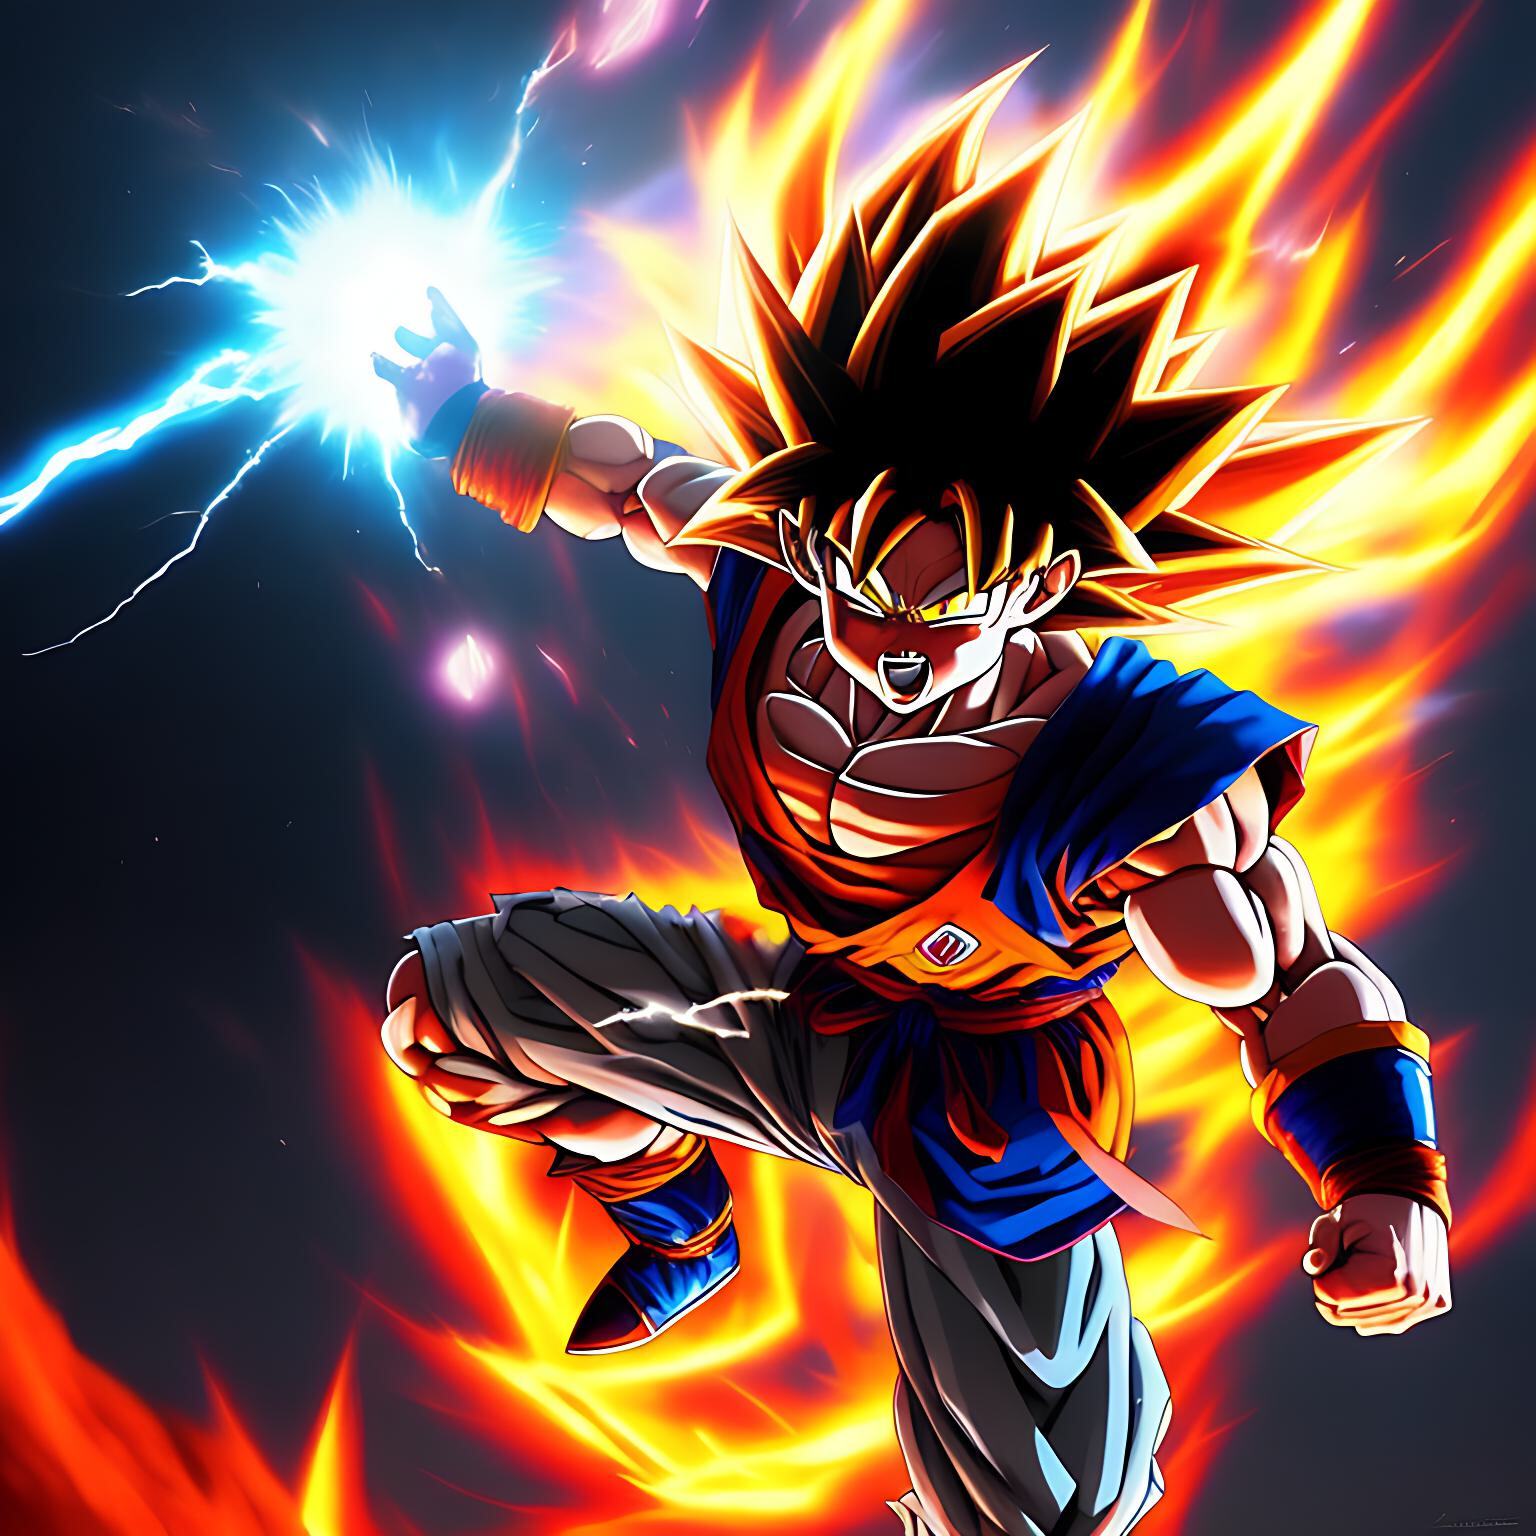 The Return of Goku: The Savior of the Universe